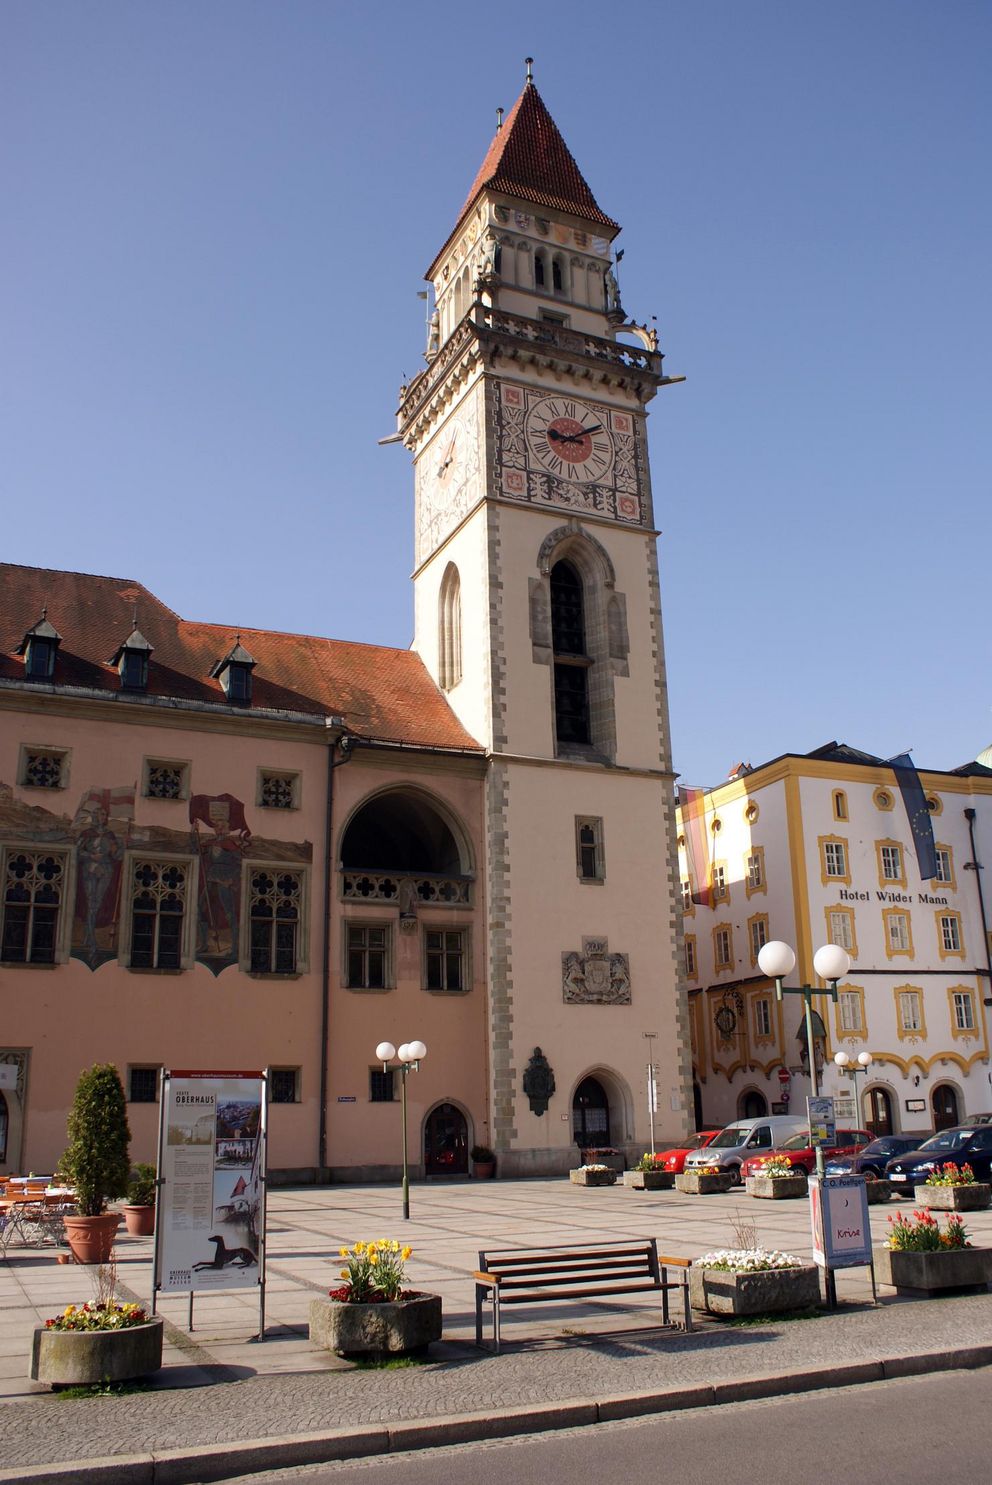 Passau's city hall